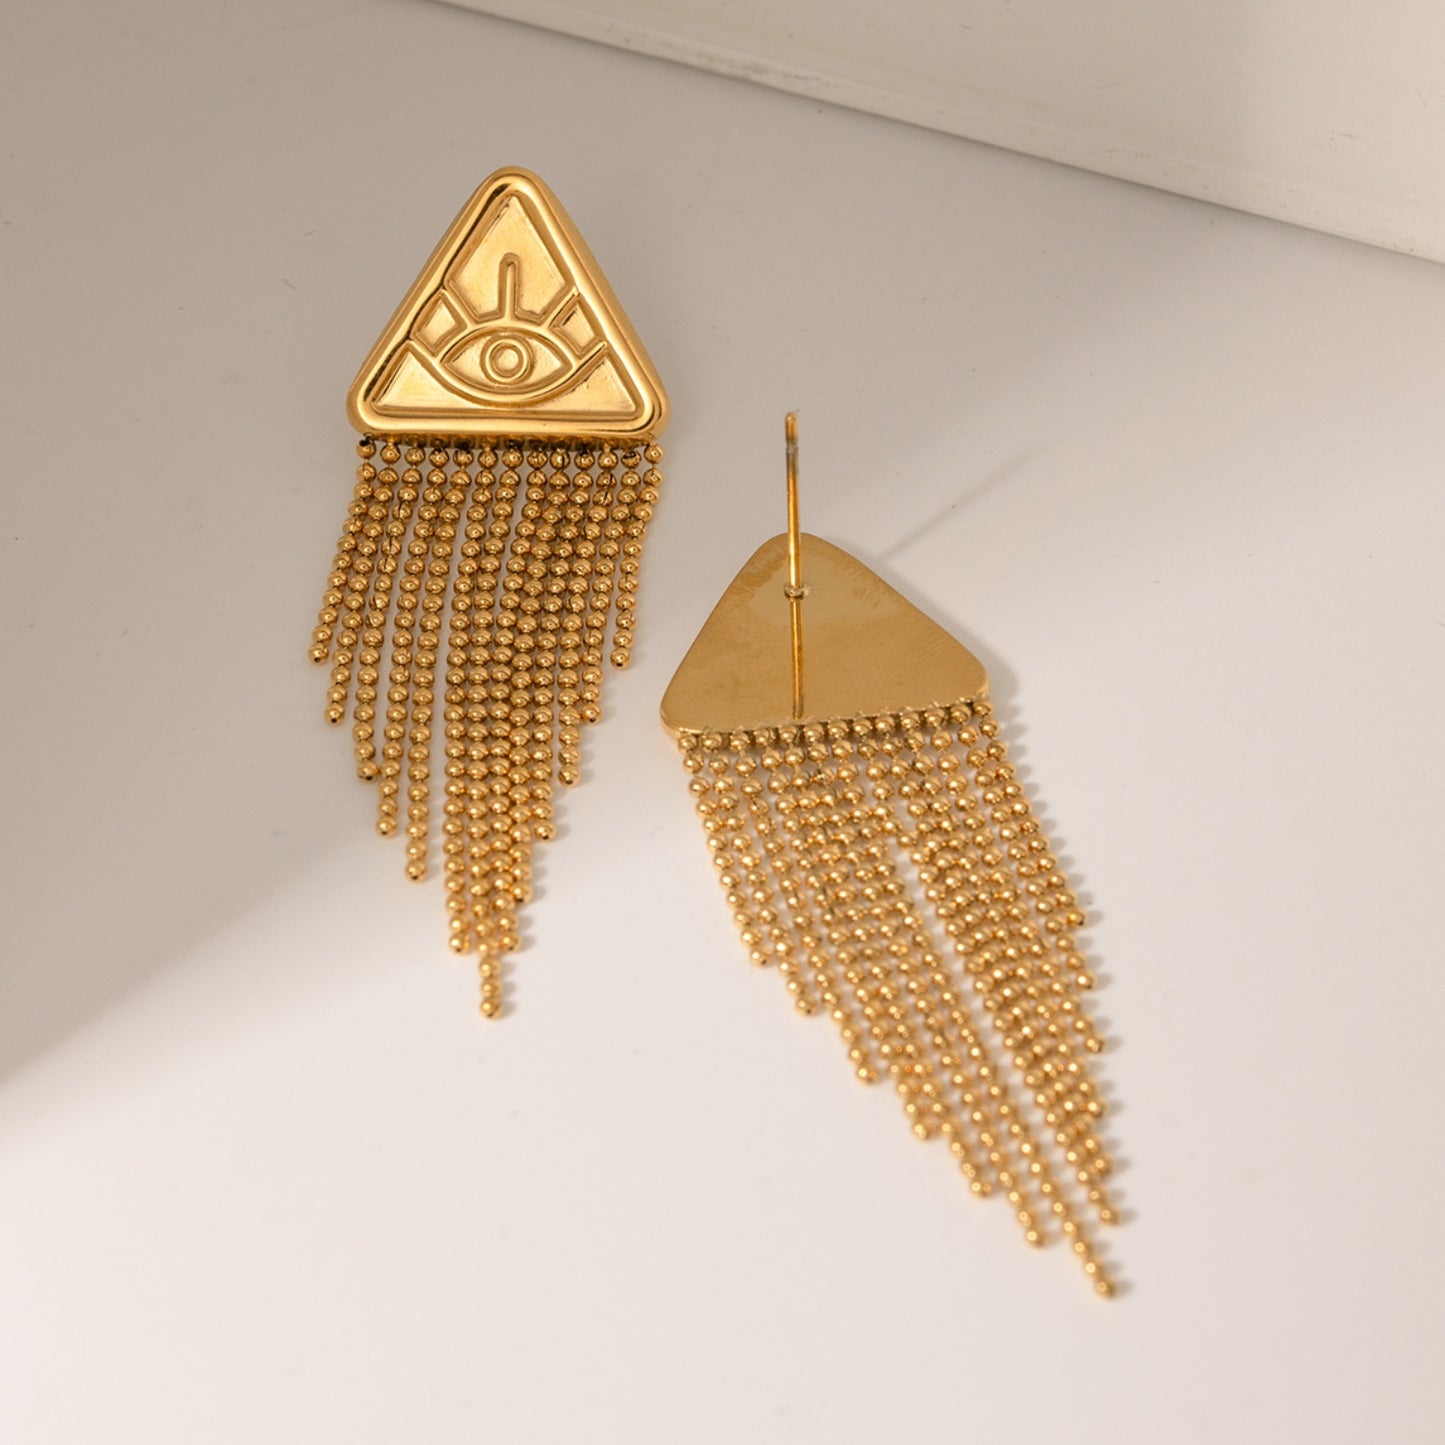 18K Gold-Plated Stainless Steel Geometric Earrings